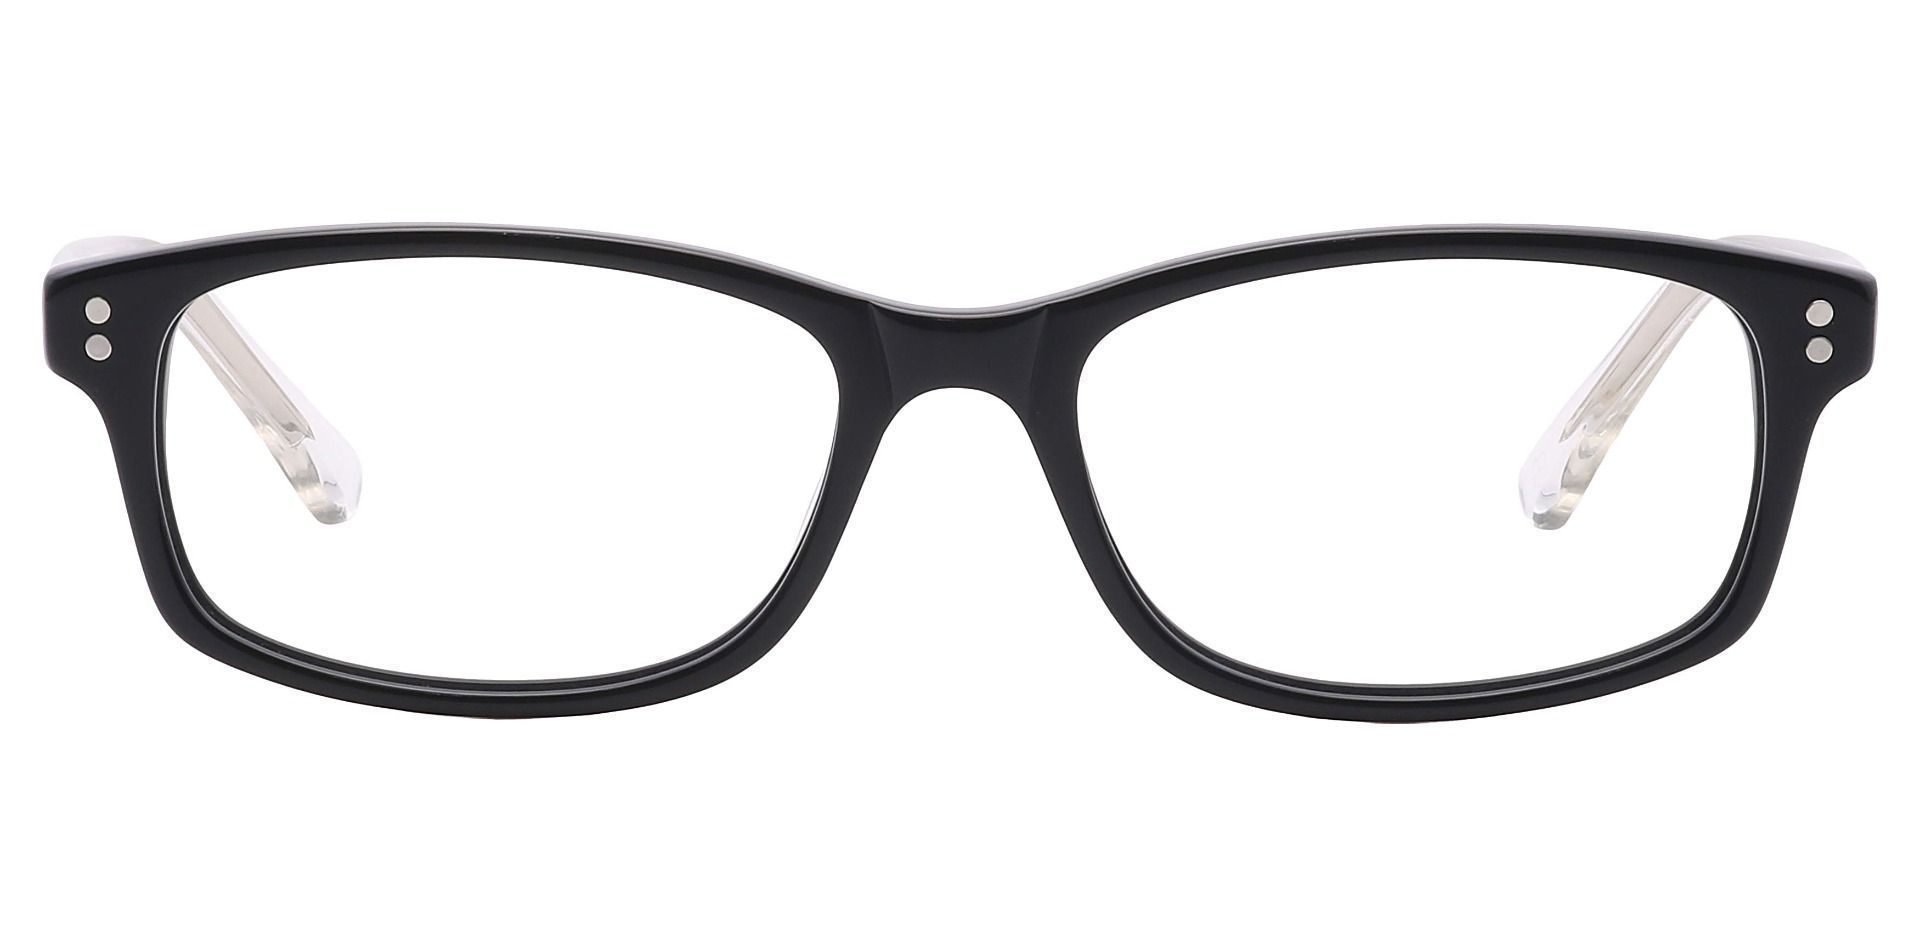 Olmstead Rectangle Progressive Glasses - Black